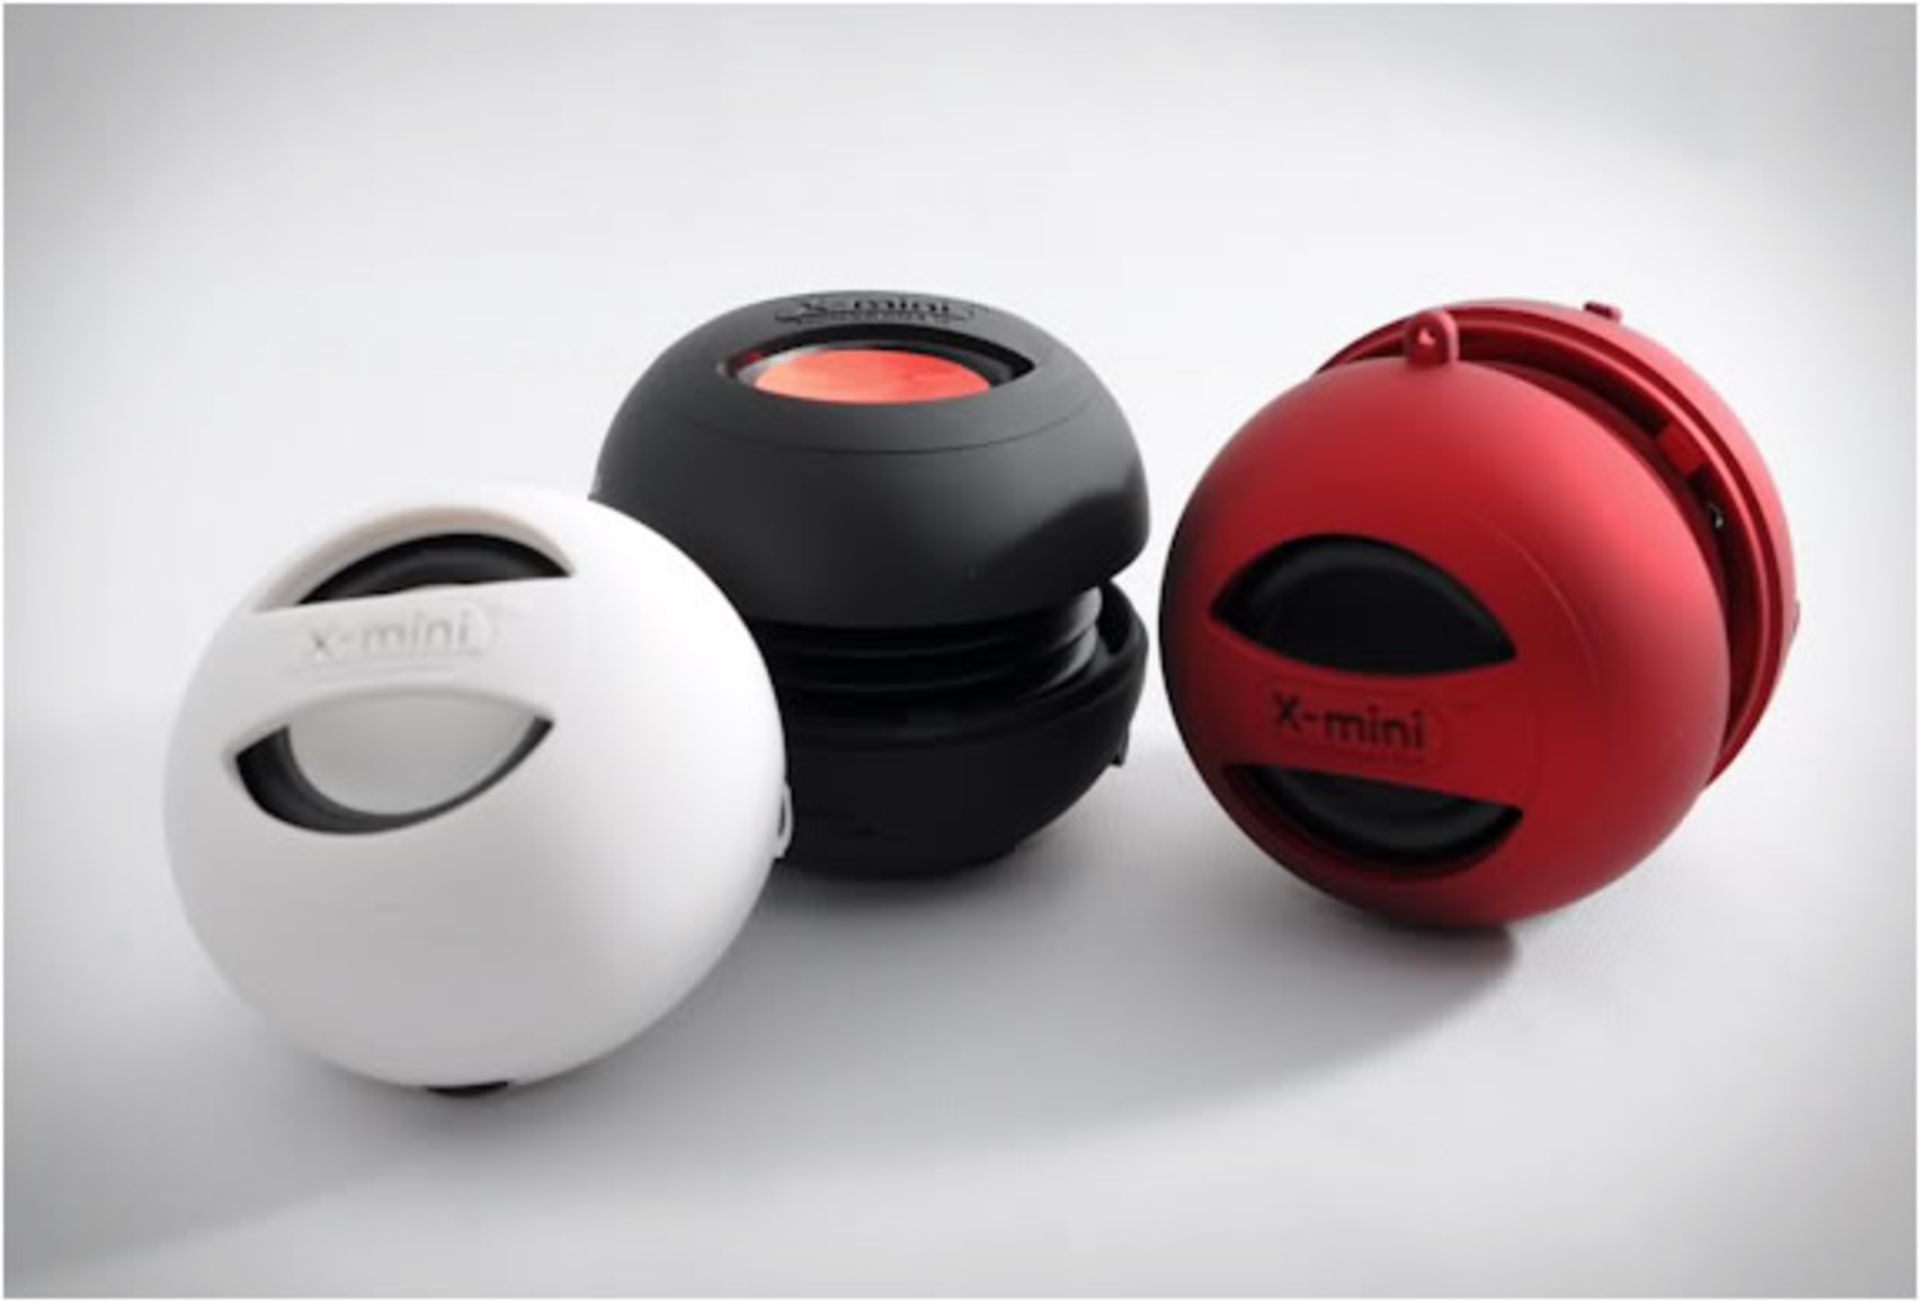 Brand New X-Mini Orginal Capsule Speaker - Online Price £20.95 (Fruugo UK)